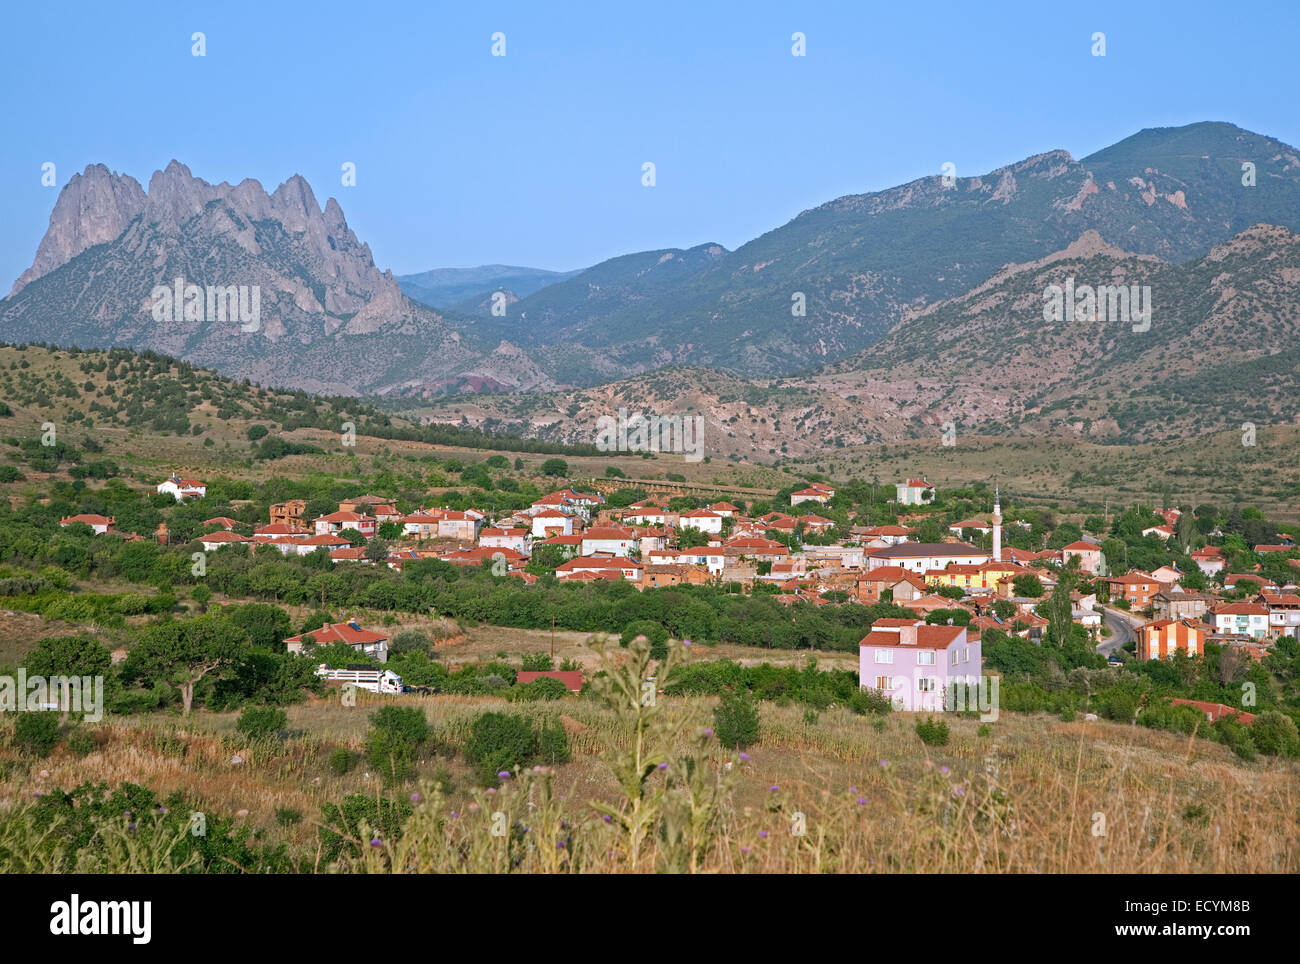 The village Mayislar in Western Turkey Stock Photo